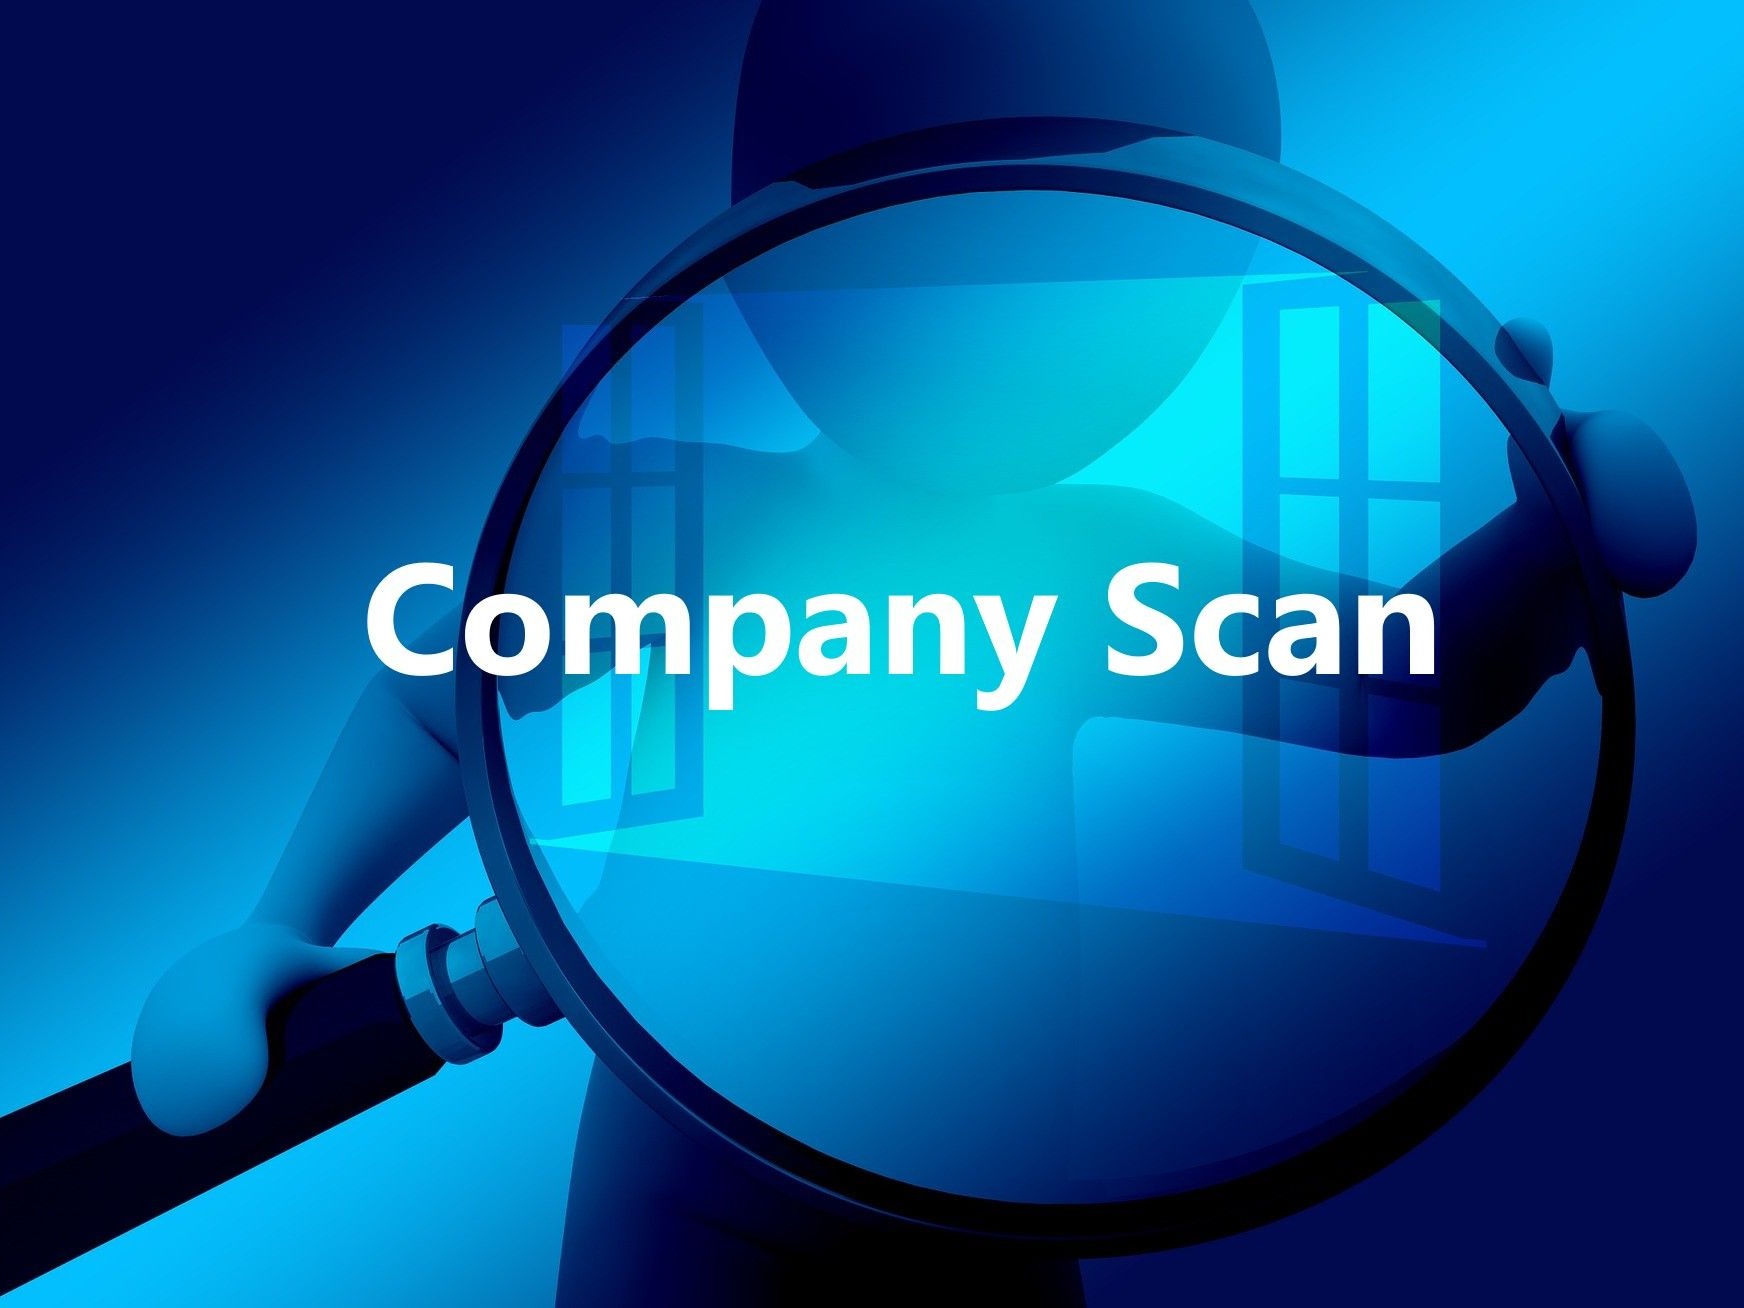 Company Scan